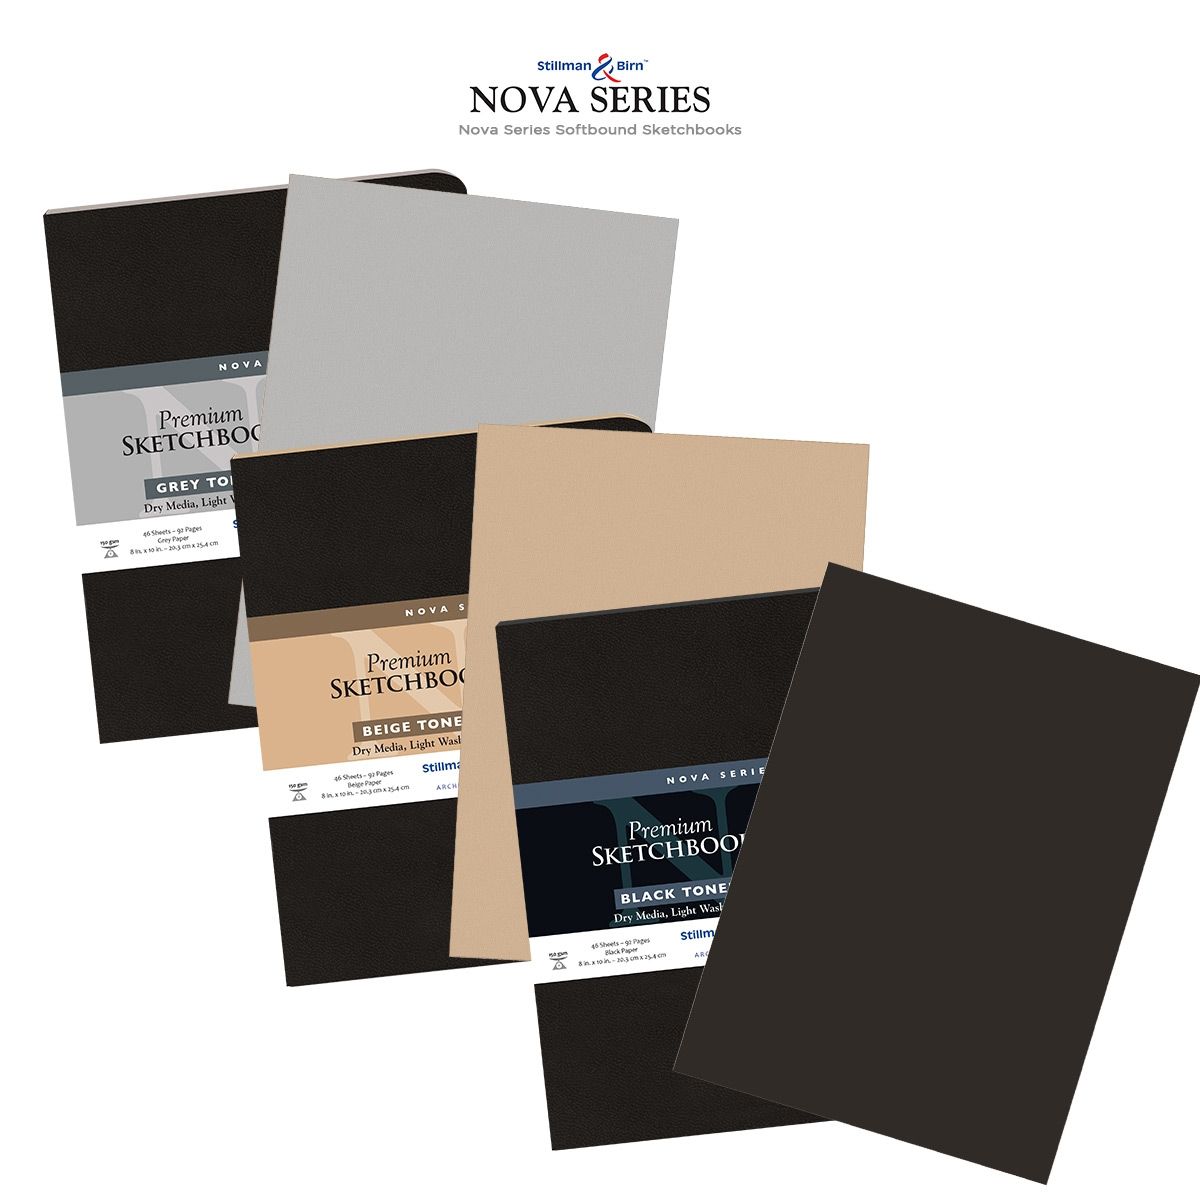 Nova Series Softbound Sketchbooks - Stillman & Birn